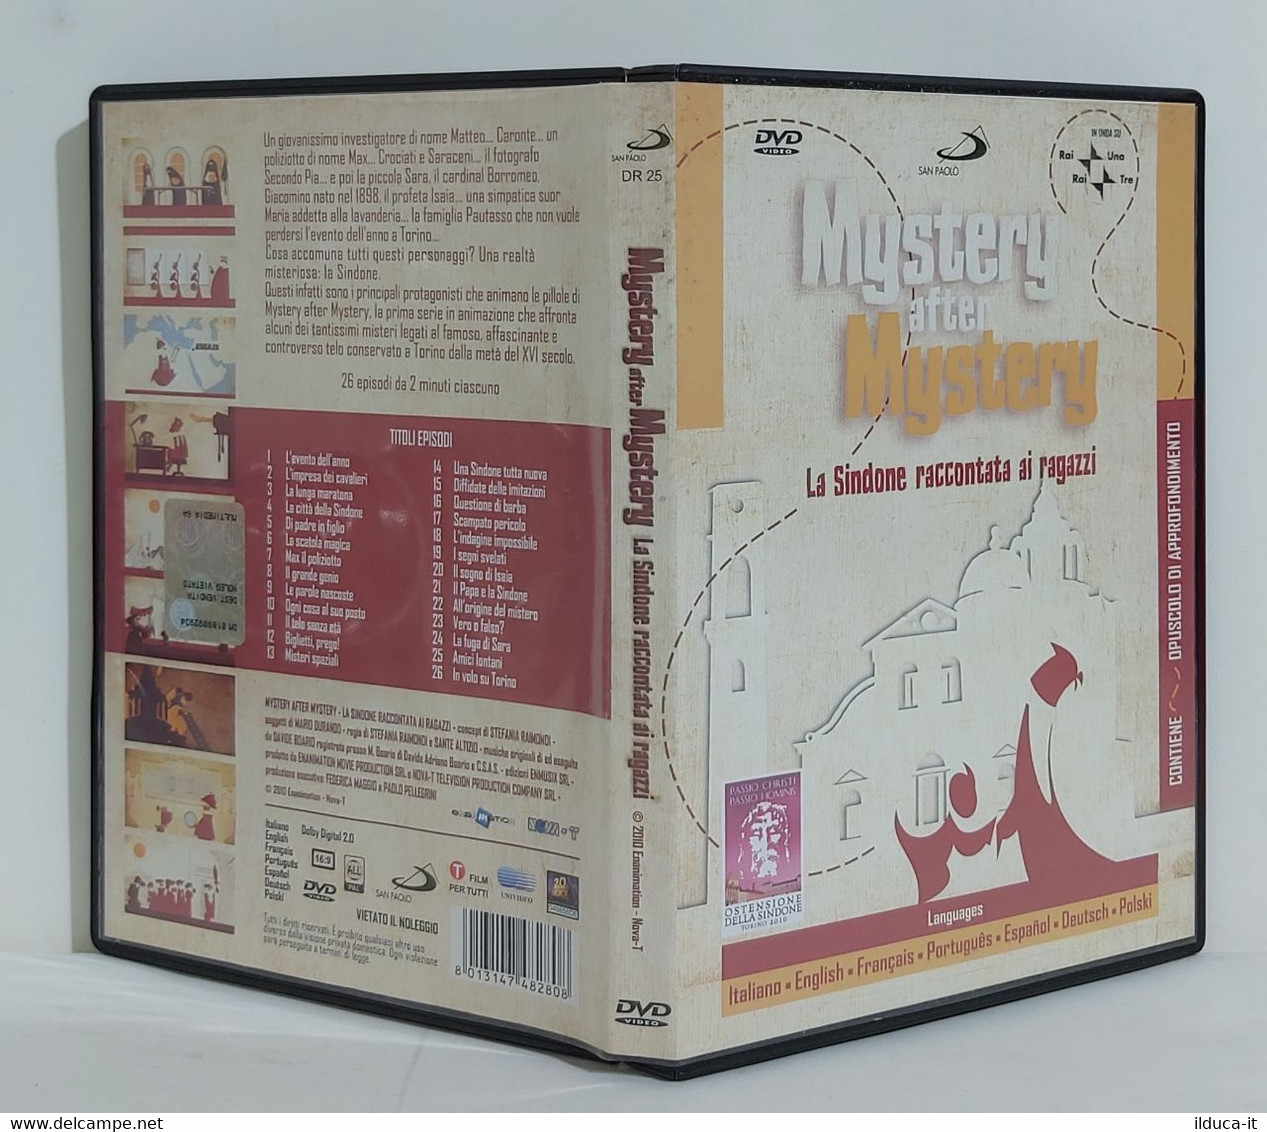 I101828 DVD - Mystery After Mystery - La Sindone Raccontata Ai Ragazzi - Documentary